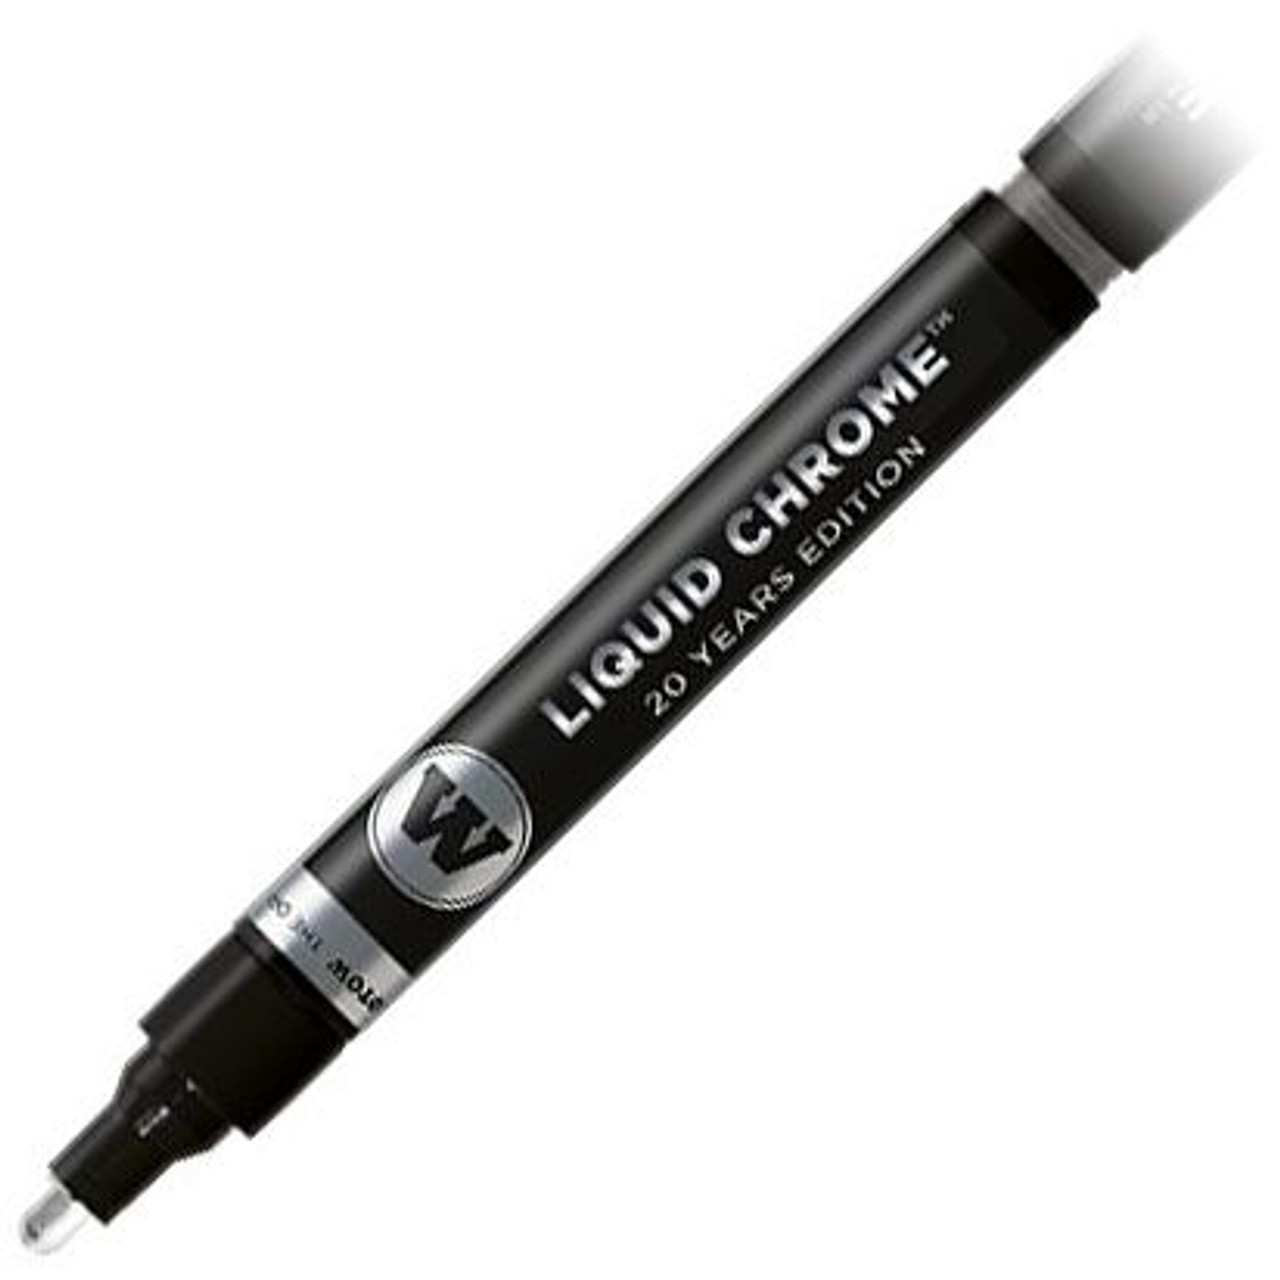 Molotow Liquid Chrome Pen Review 